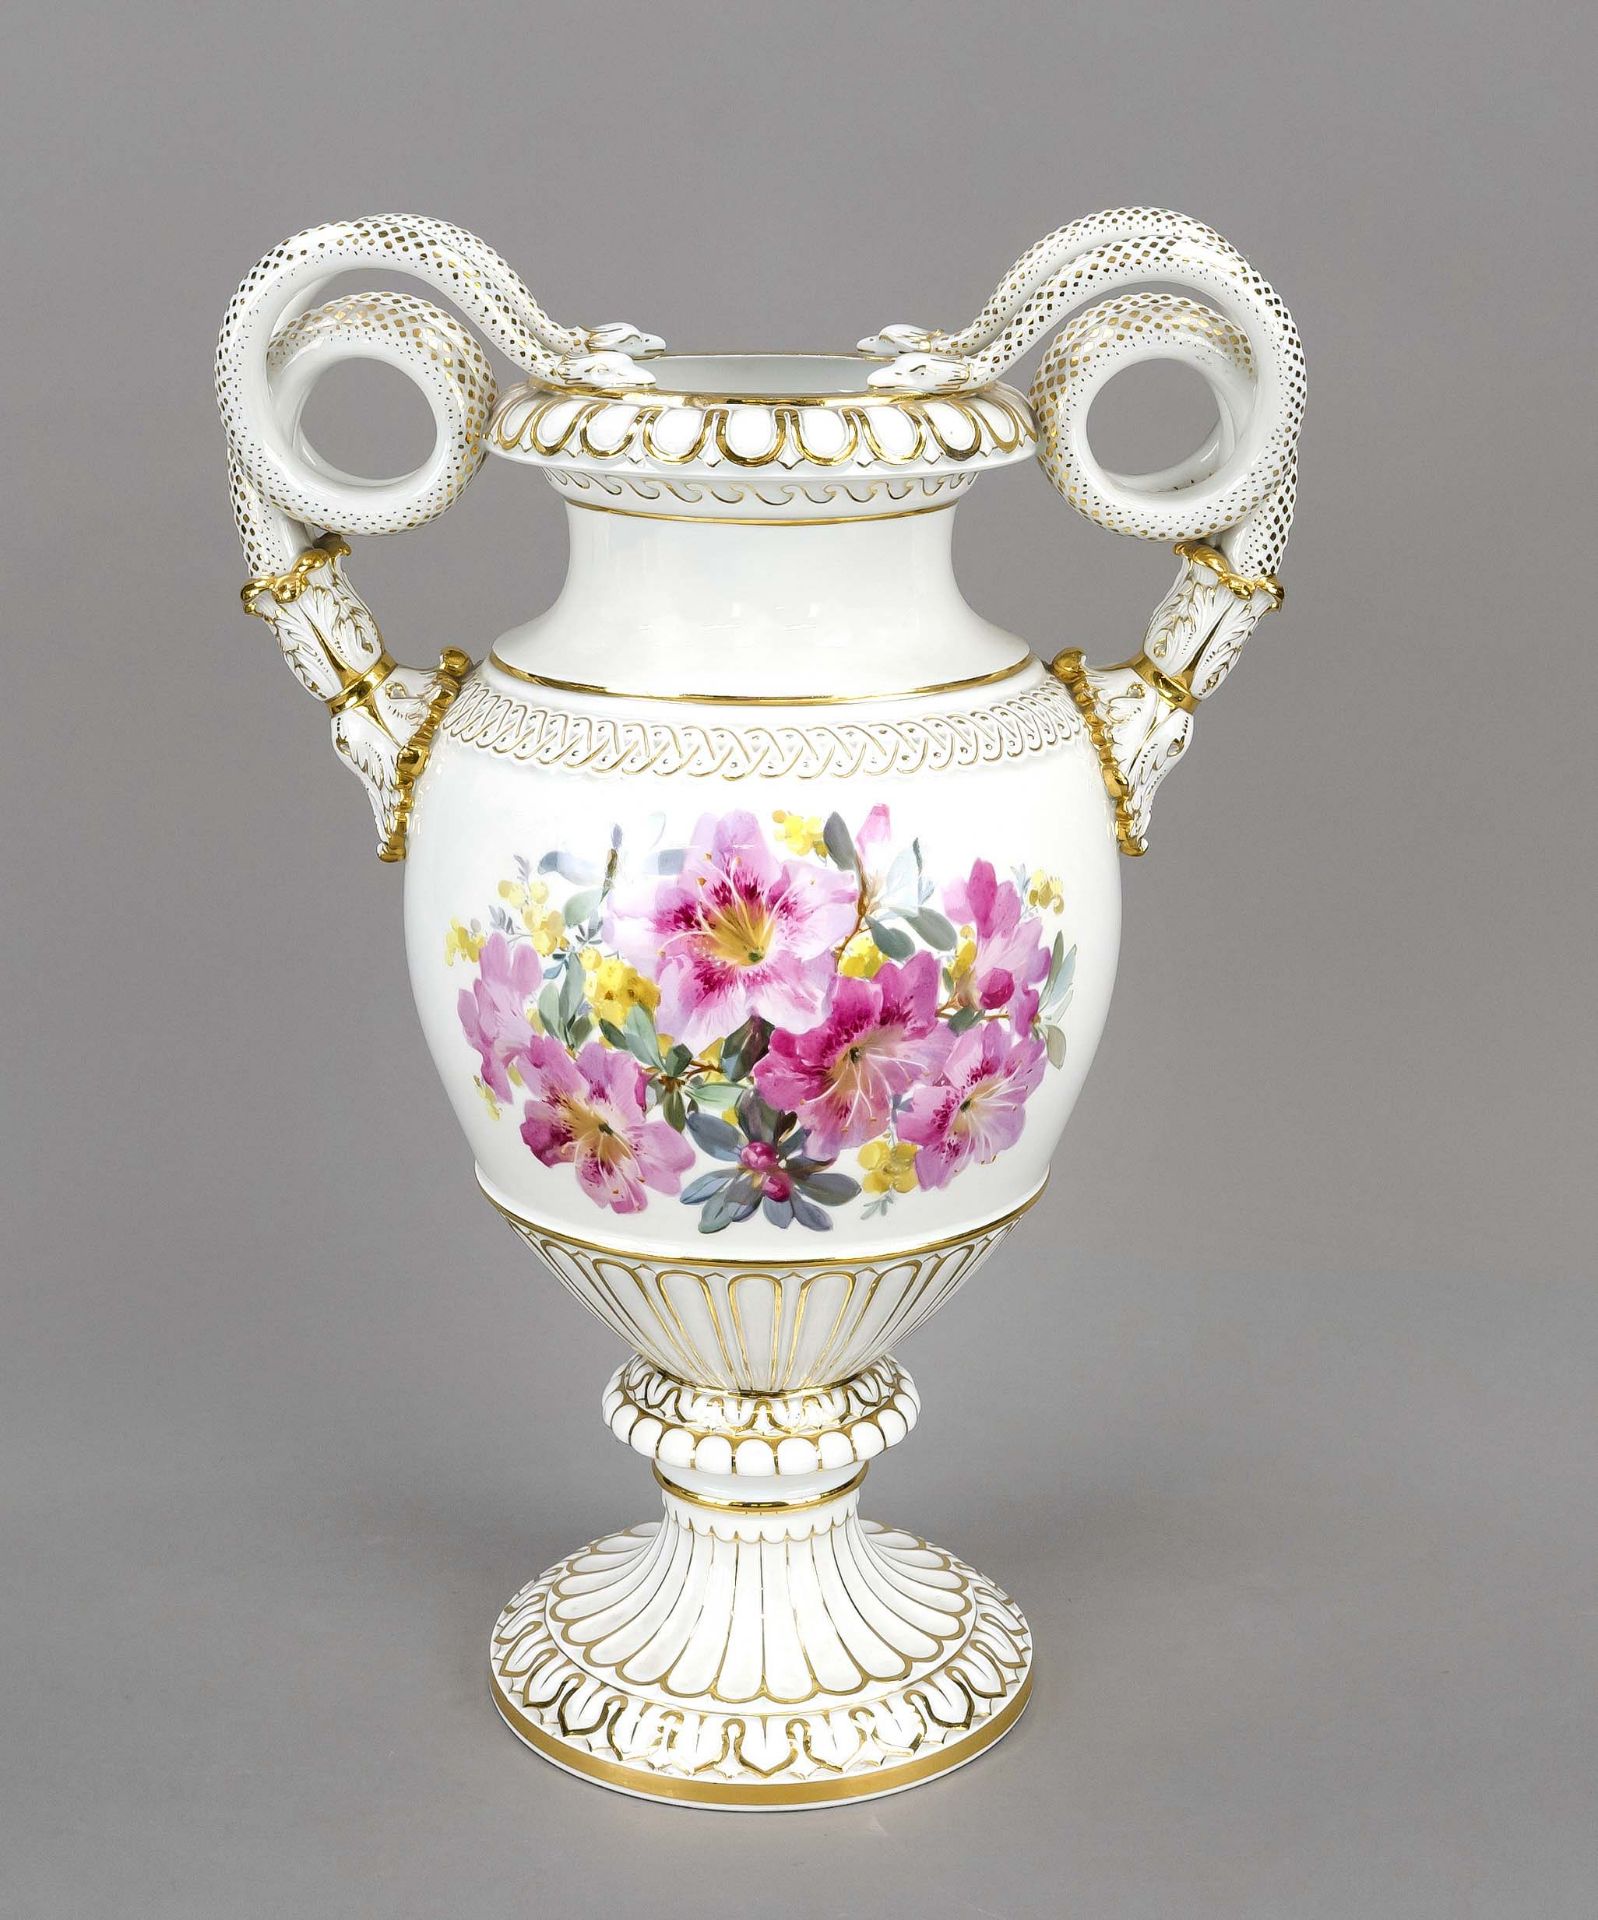 Double snake-handled vase, Meissen, Knauff Schwerter 1850-1924, 1st choice, model no. A 148,